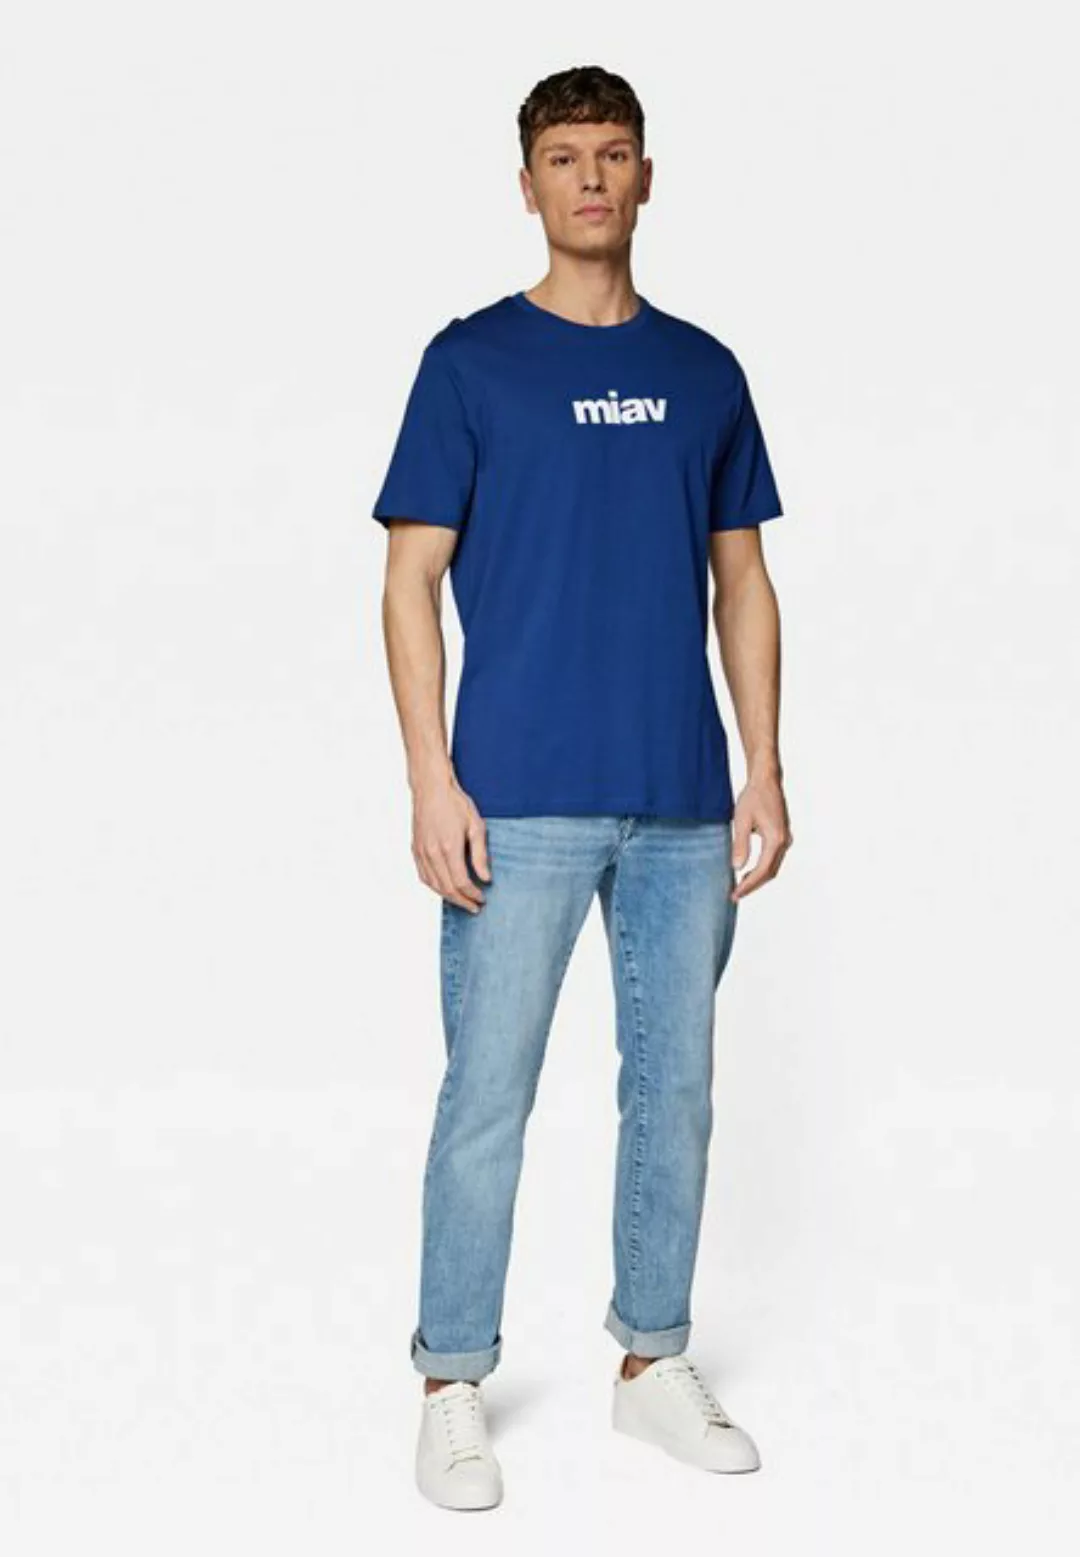 Mavi Rundhalsshirt MIAV PRINTED TEE Shirt mit Miav Print günstig online kaufen